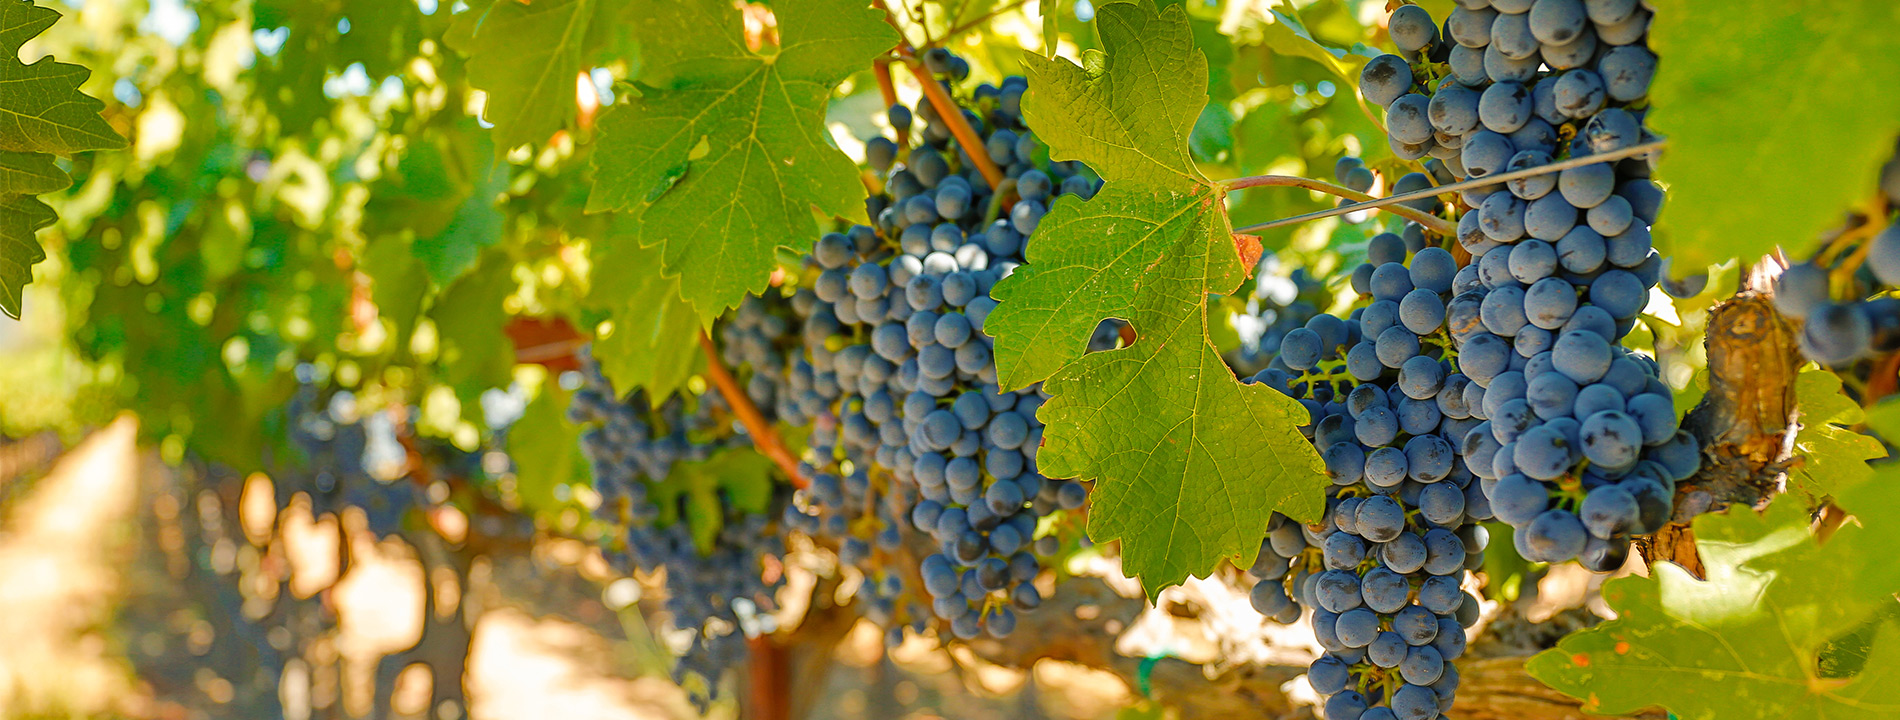 Grapes from vinyard.